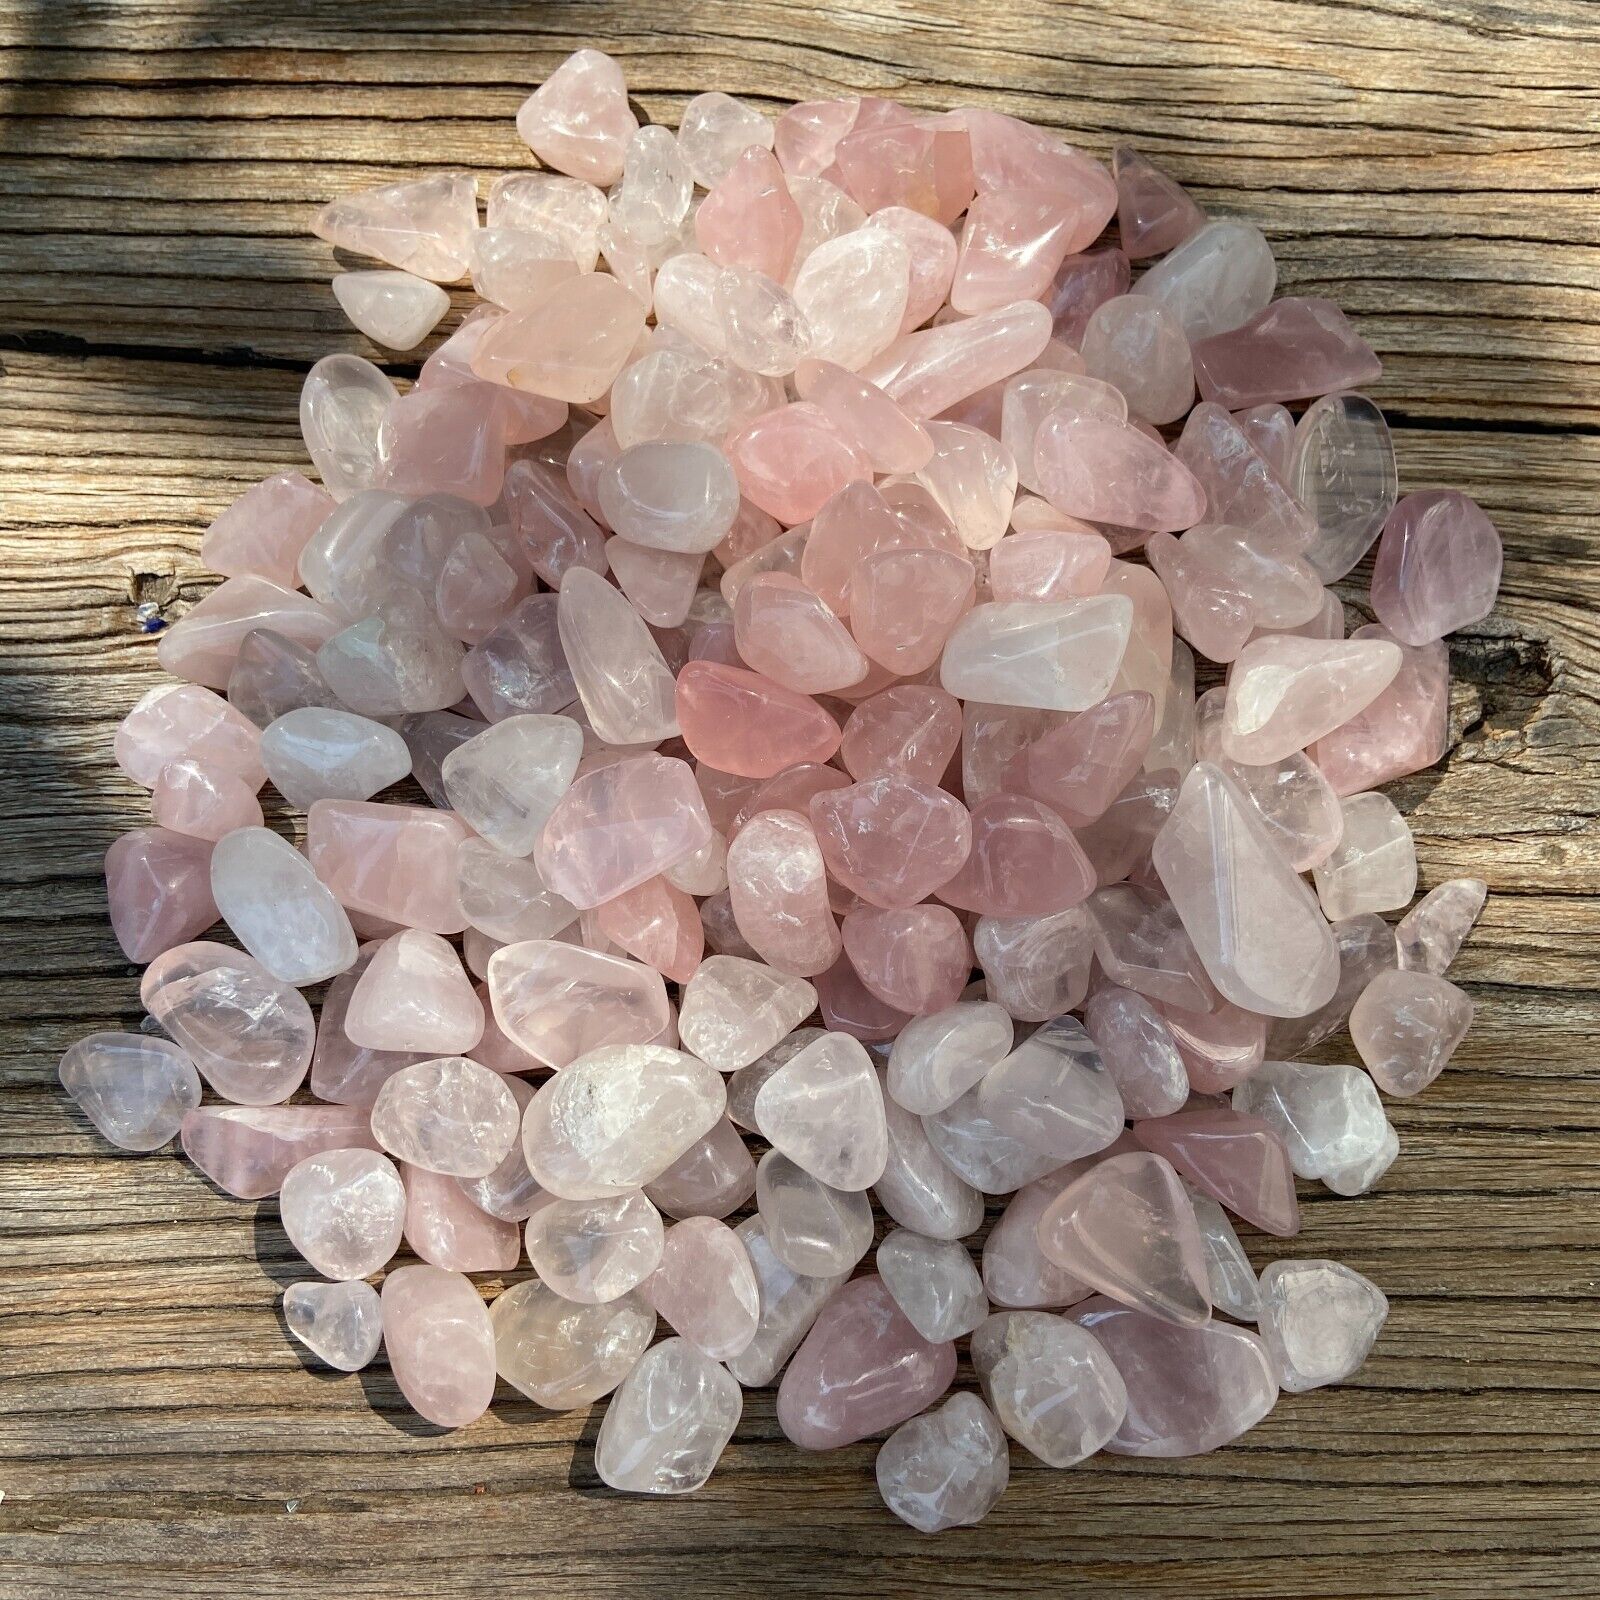 2LB JUMBO Pink Rose Quartz Polished Rock Tumbled Stone Gemstone Healing Reiki